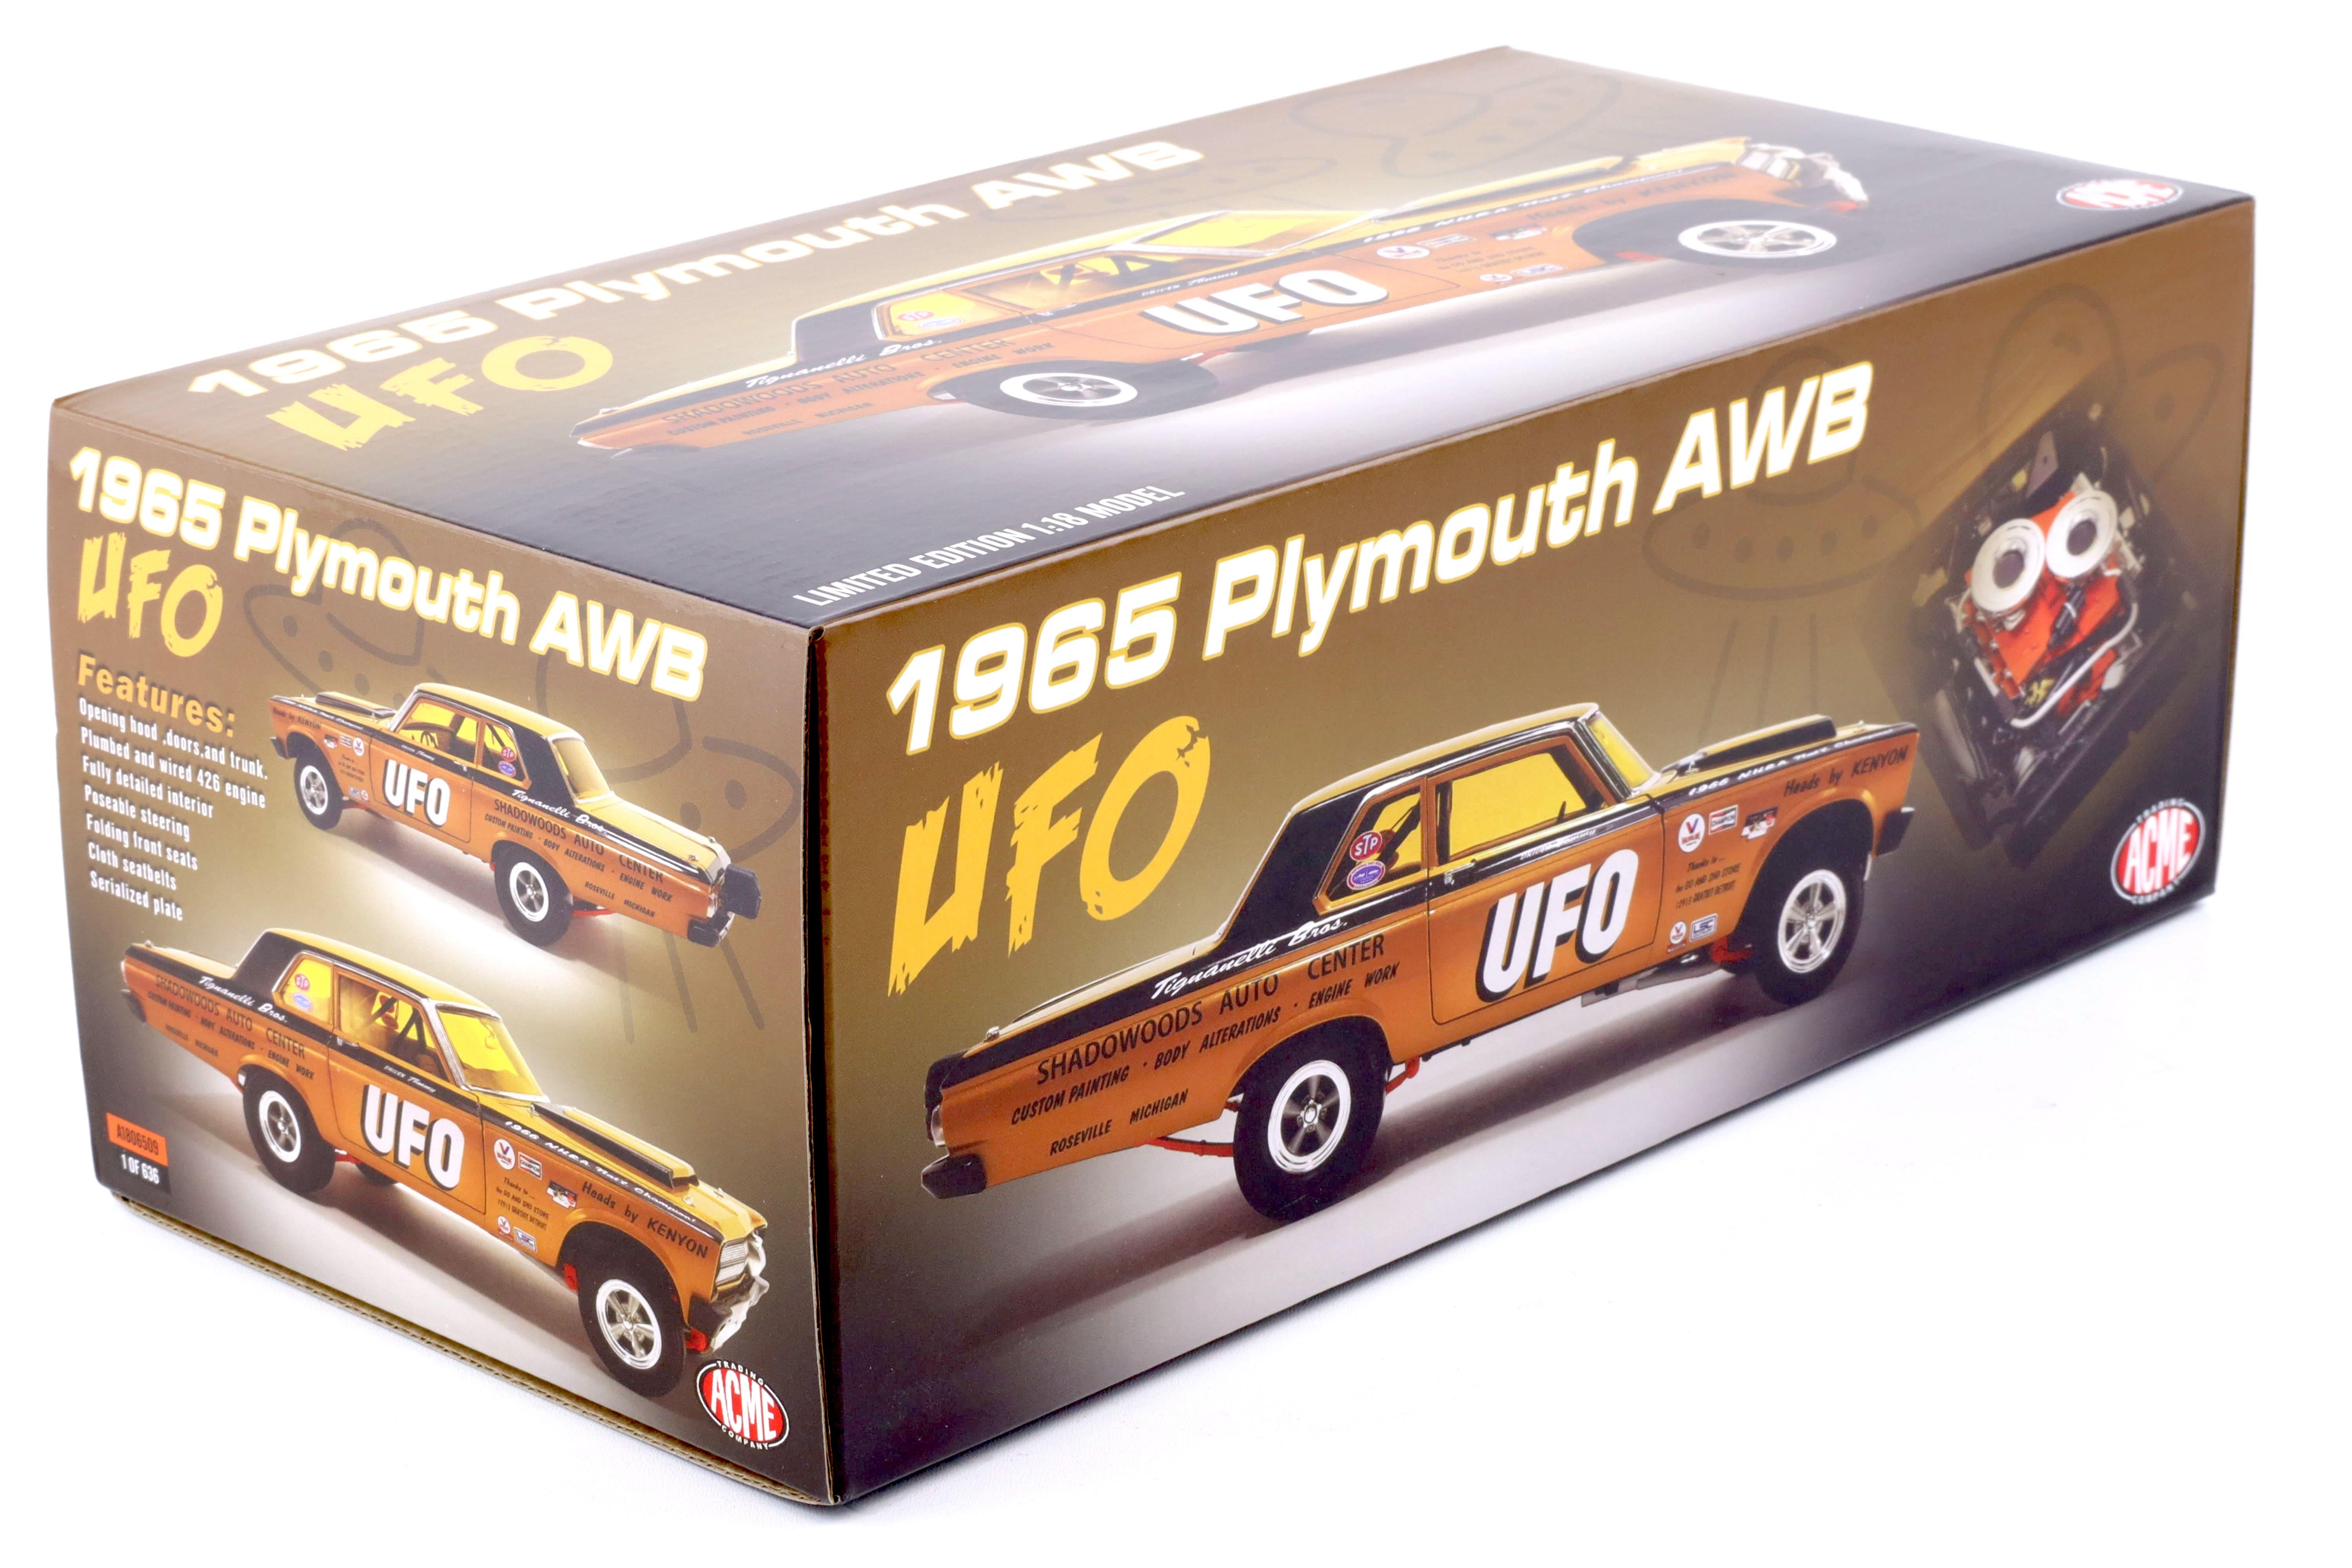 1:18 ACME 1965 Plymouth AWB Drag Car UFO gold/ black A1806509